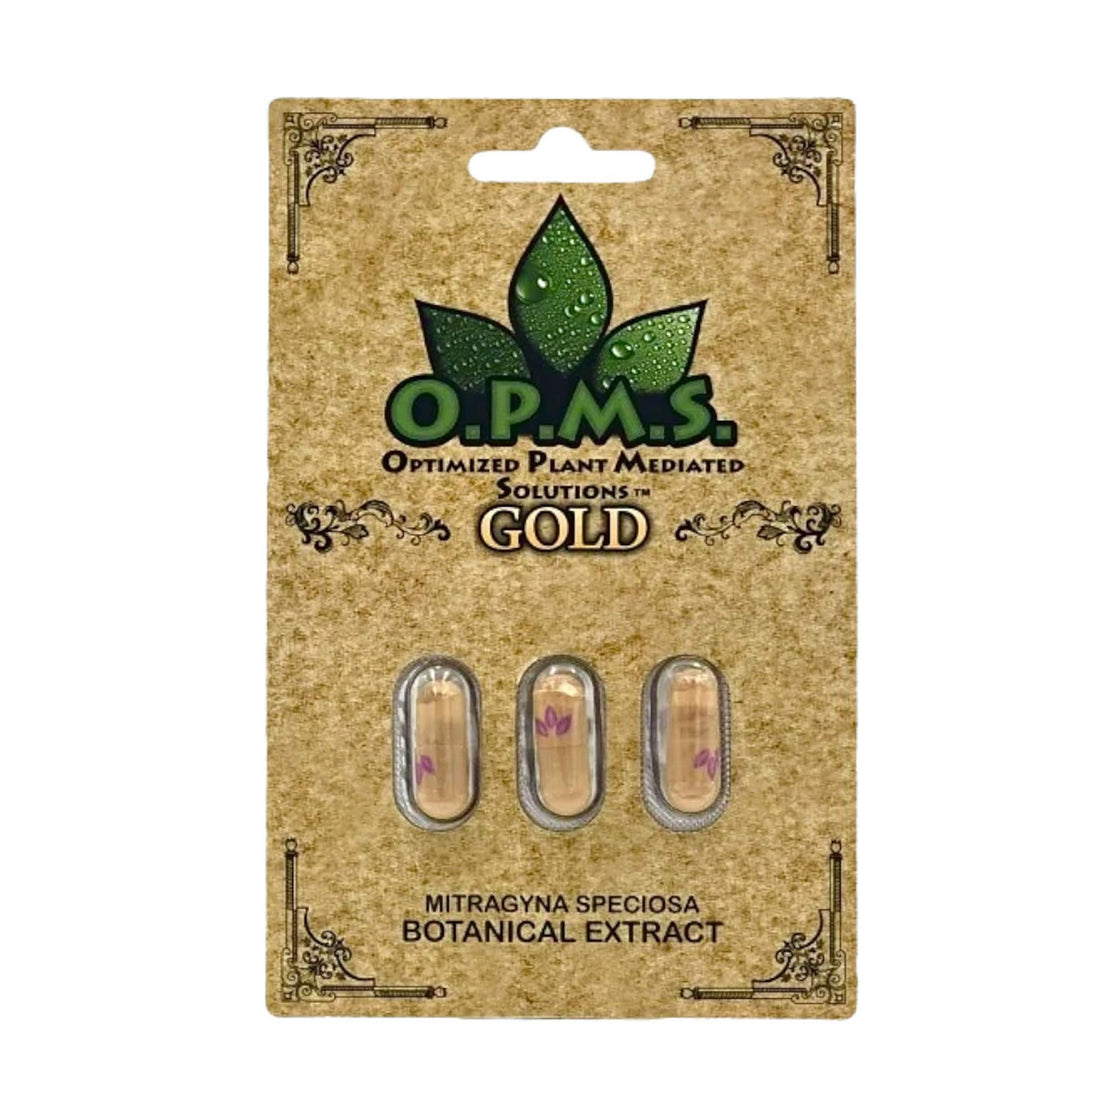 OPMS Black & Gold Kratom Extract Capsules